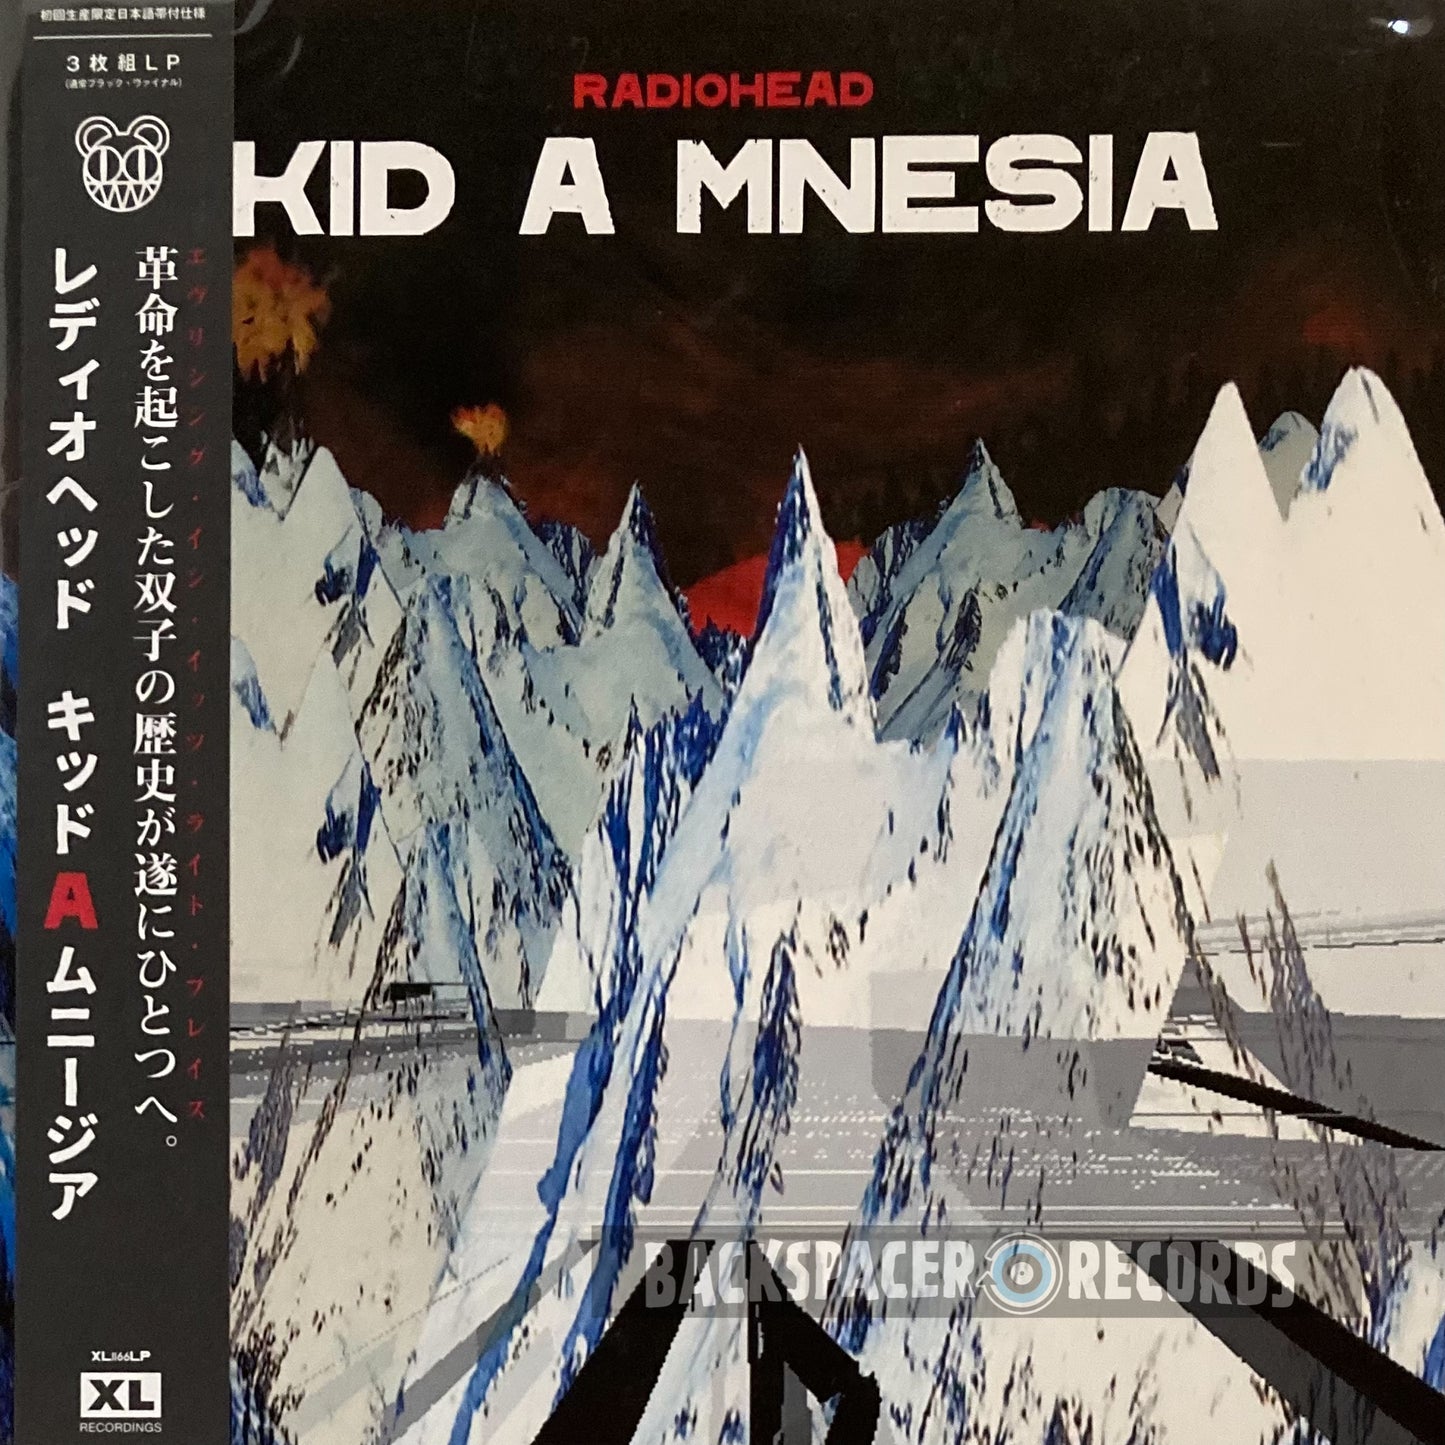 Radiohead – Kid A Mnesia 3-LP (Japan Pressing)